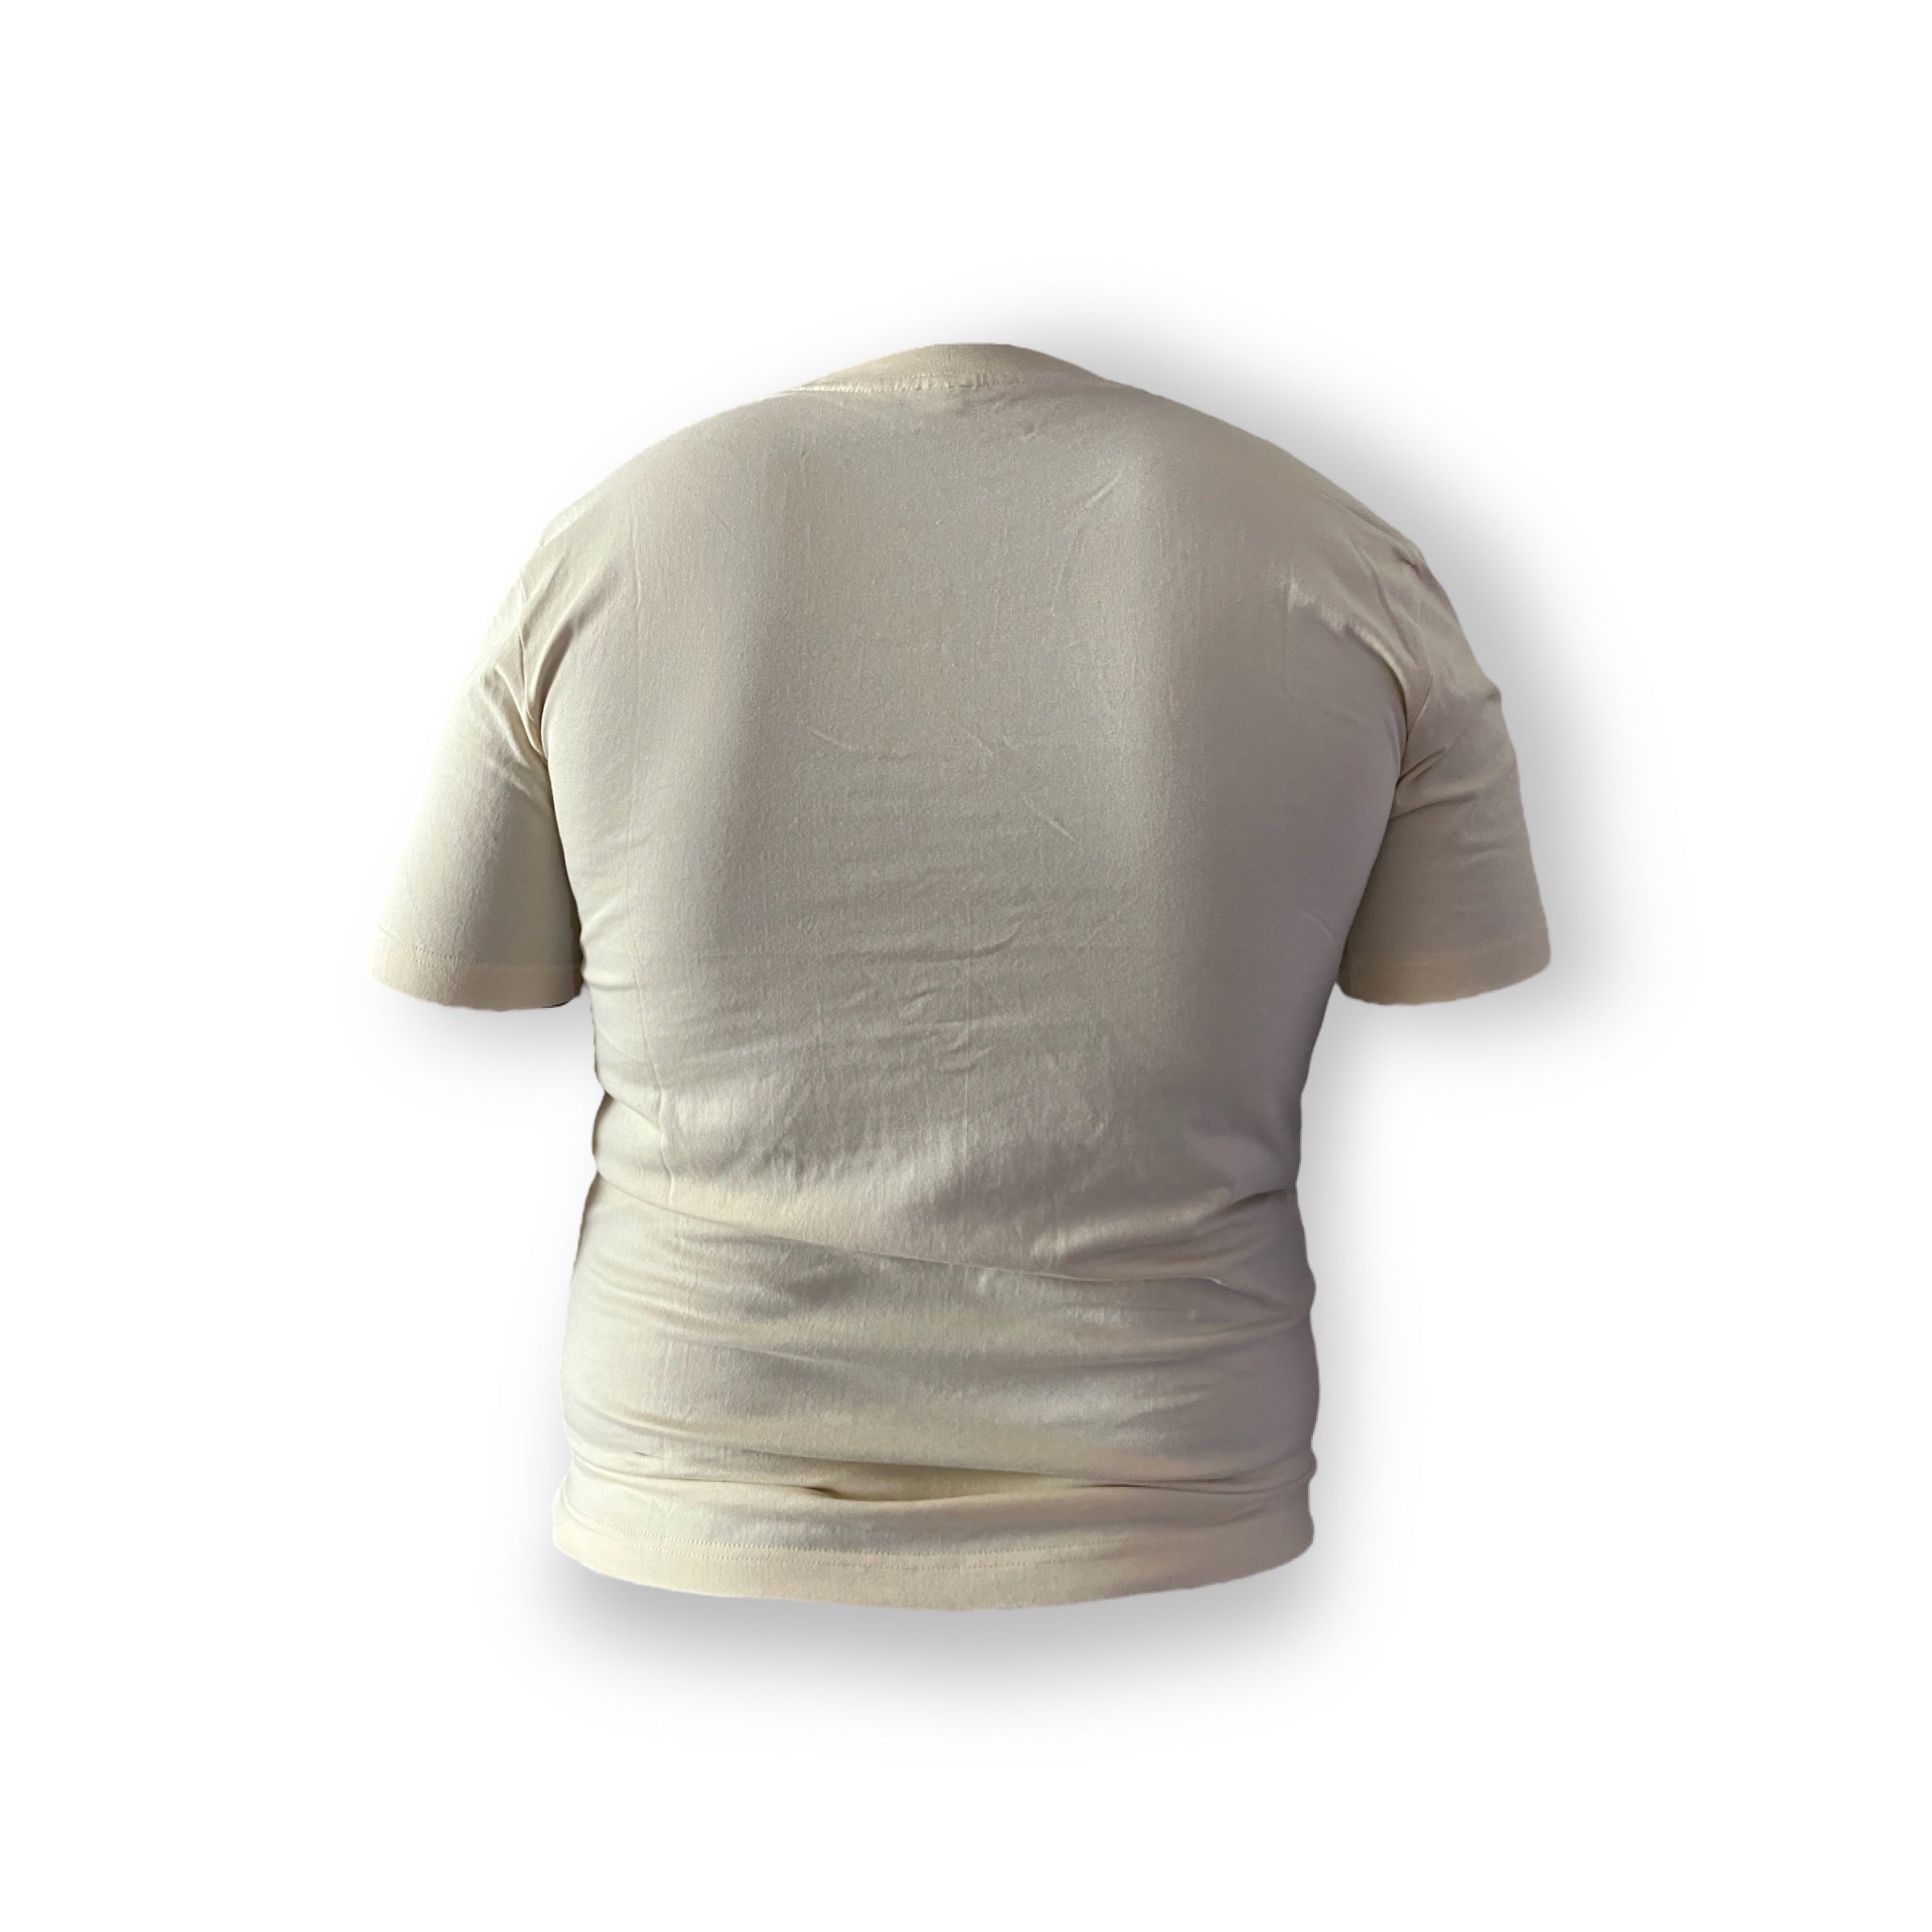 Embroidered Tian Zevon Shirt- Tan